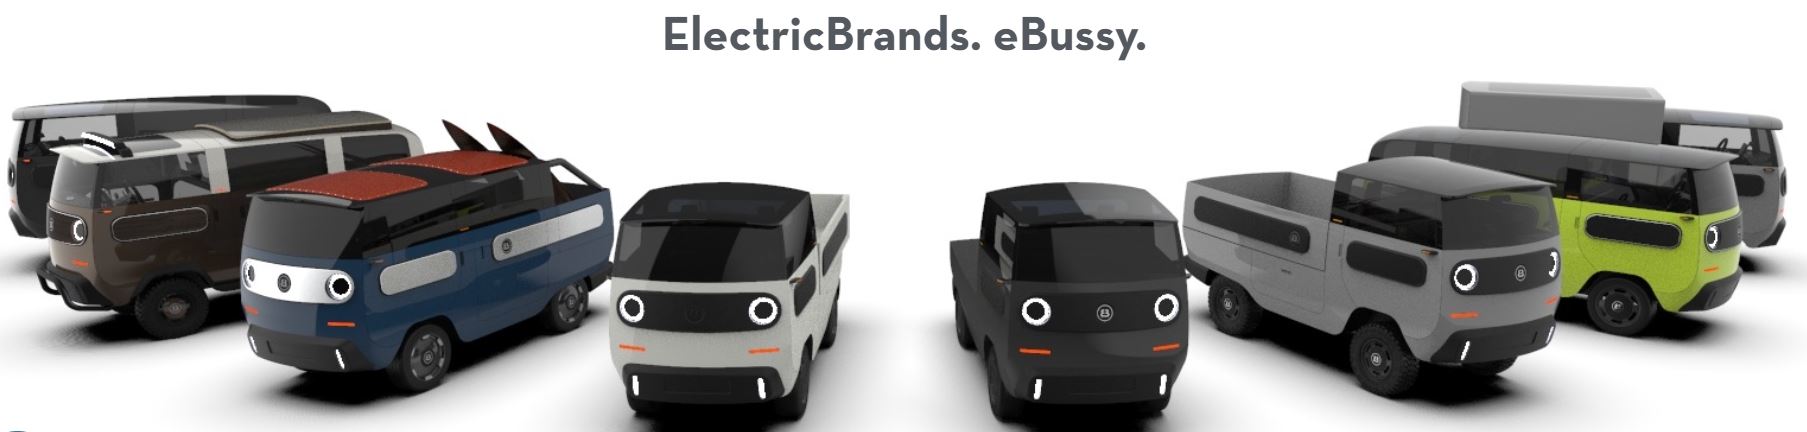 Electric Brands eBussy Vans 2021